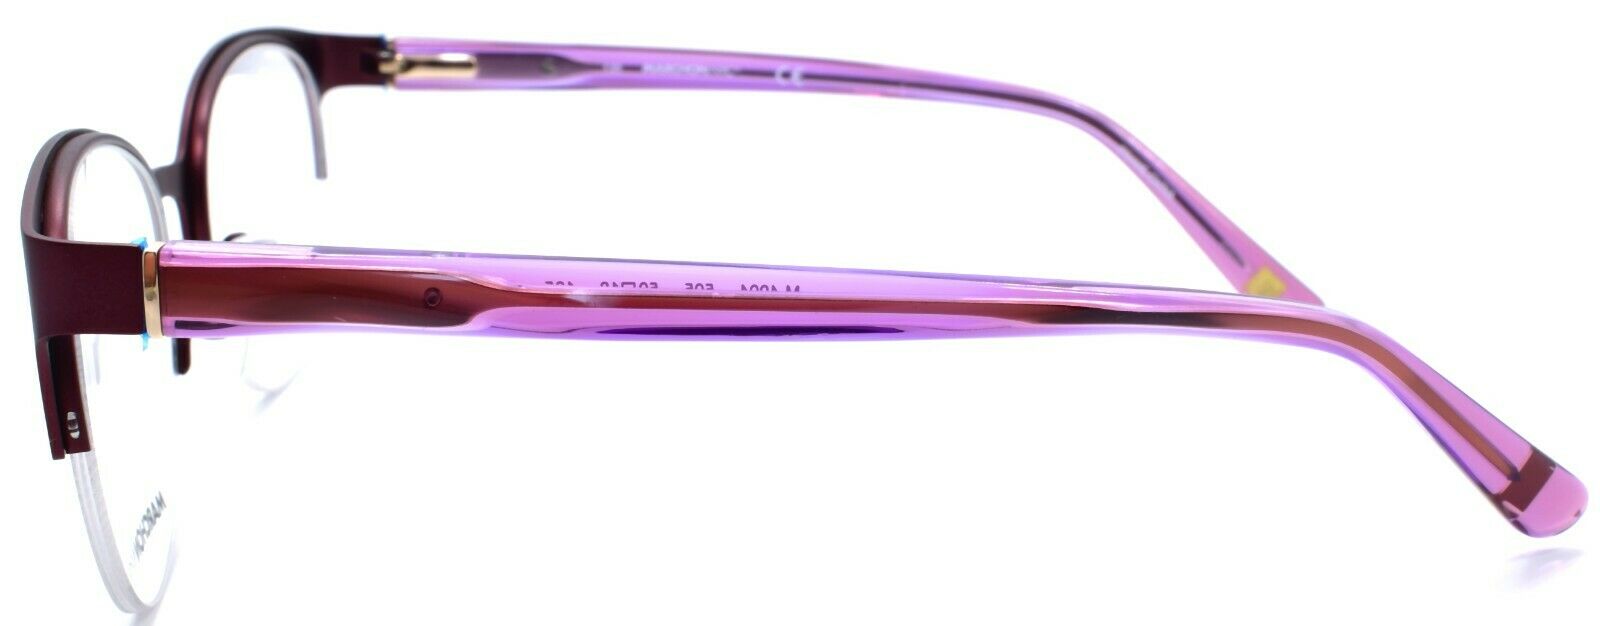 3-Marchon M4004 505 Women's Eyeglasses Frames Half-rim 50-18-135 Plum-886895430579-IKSpecs